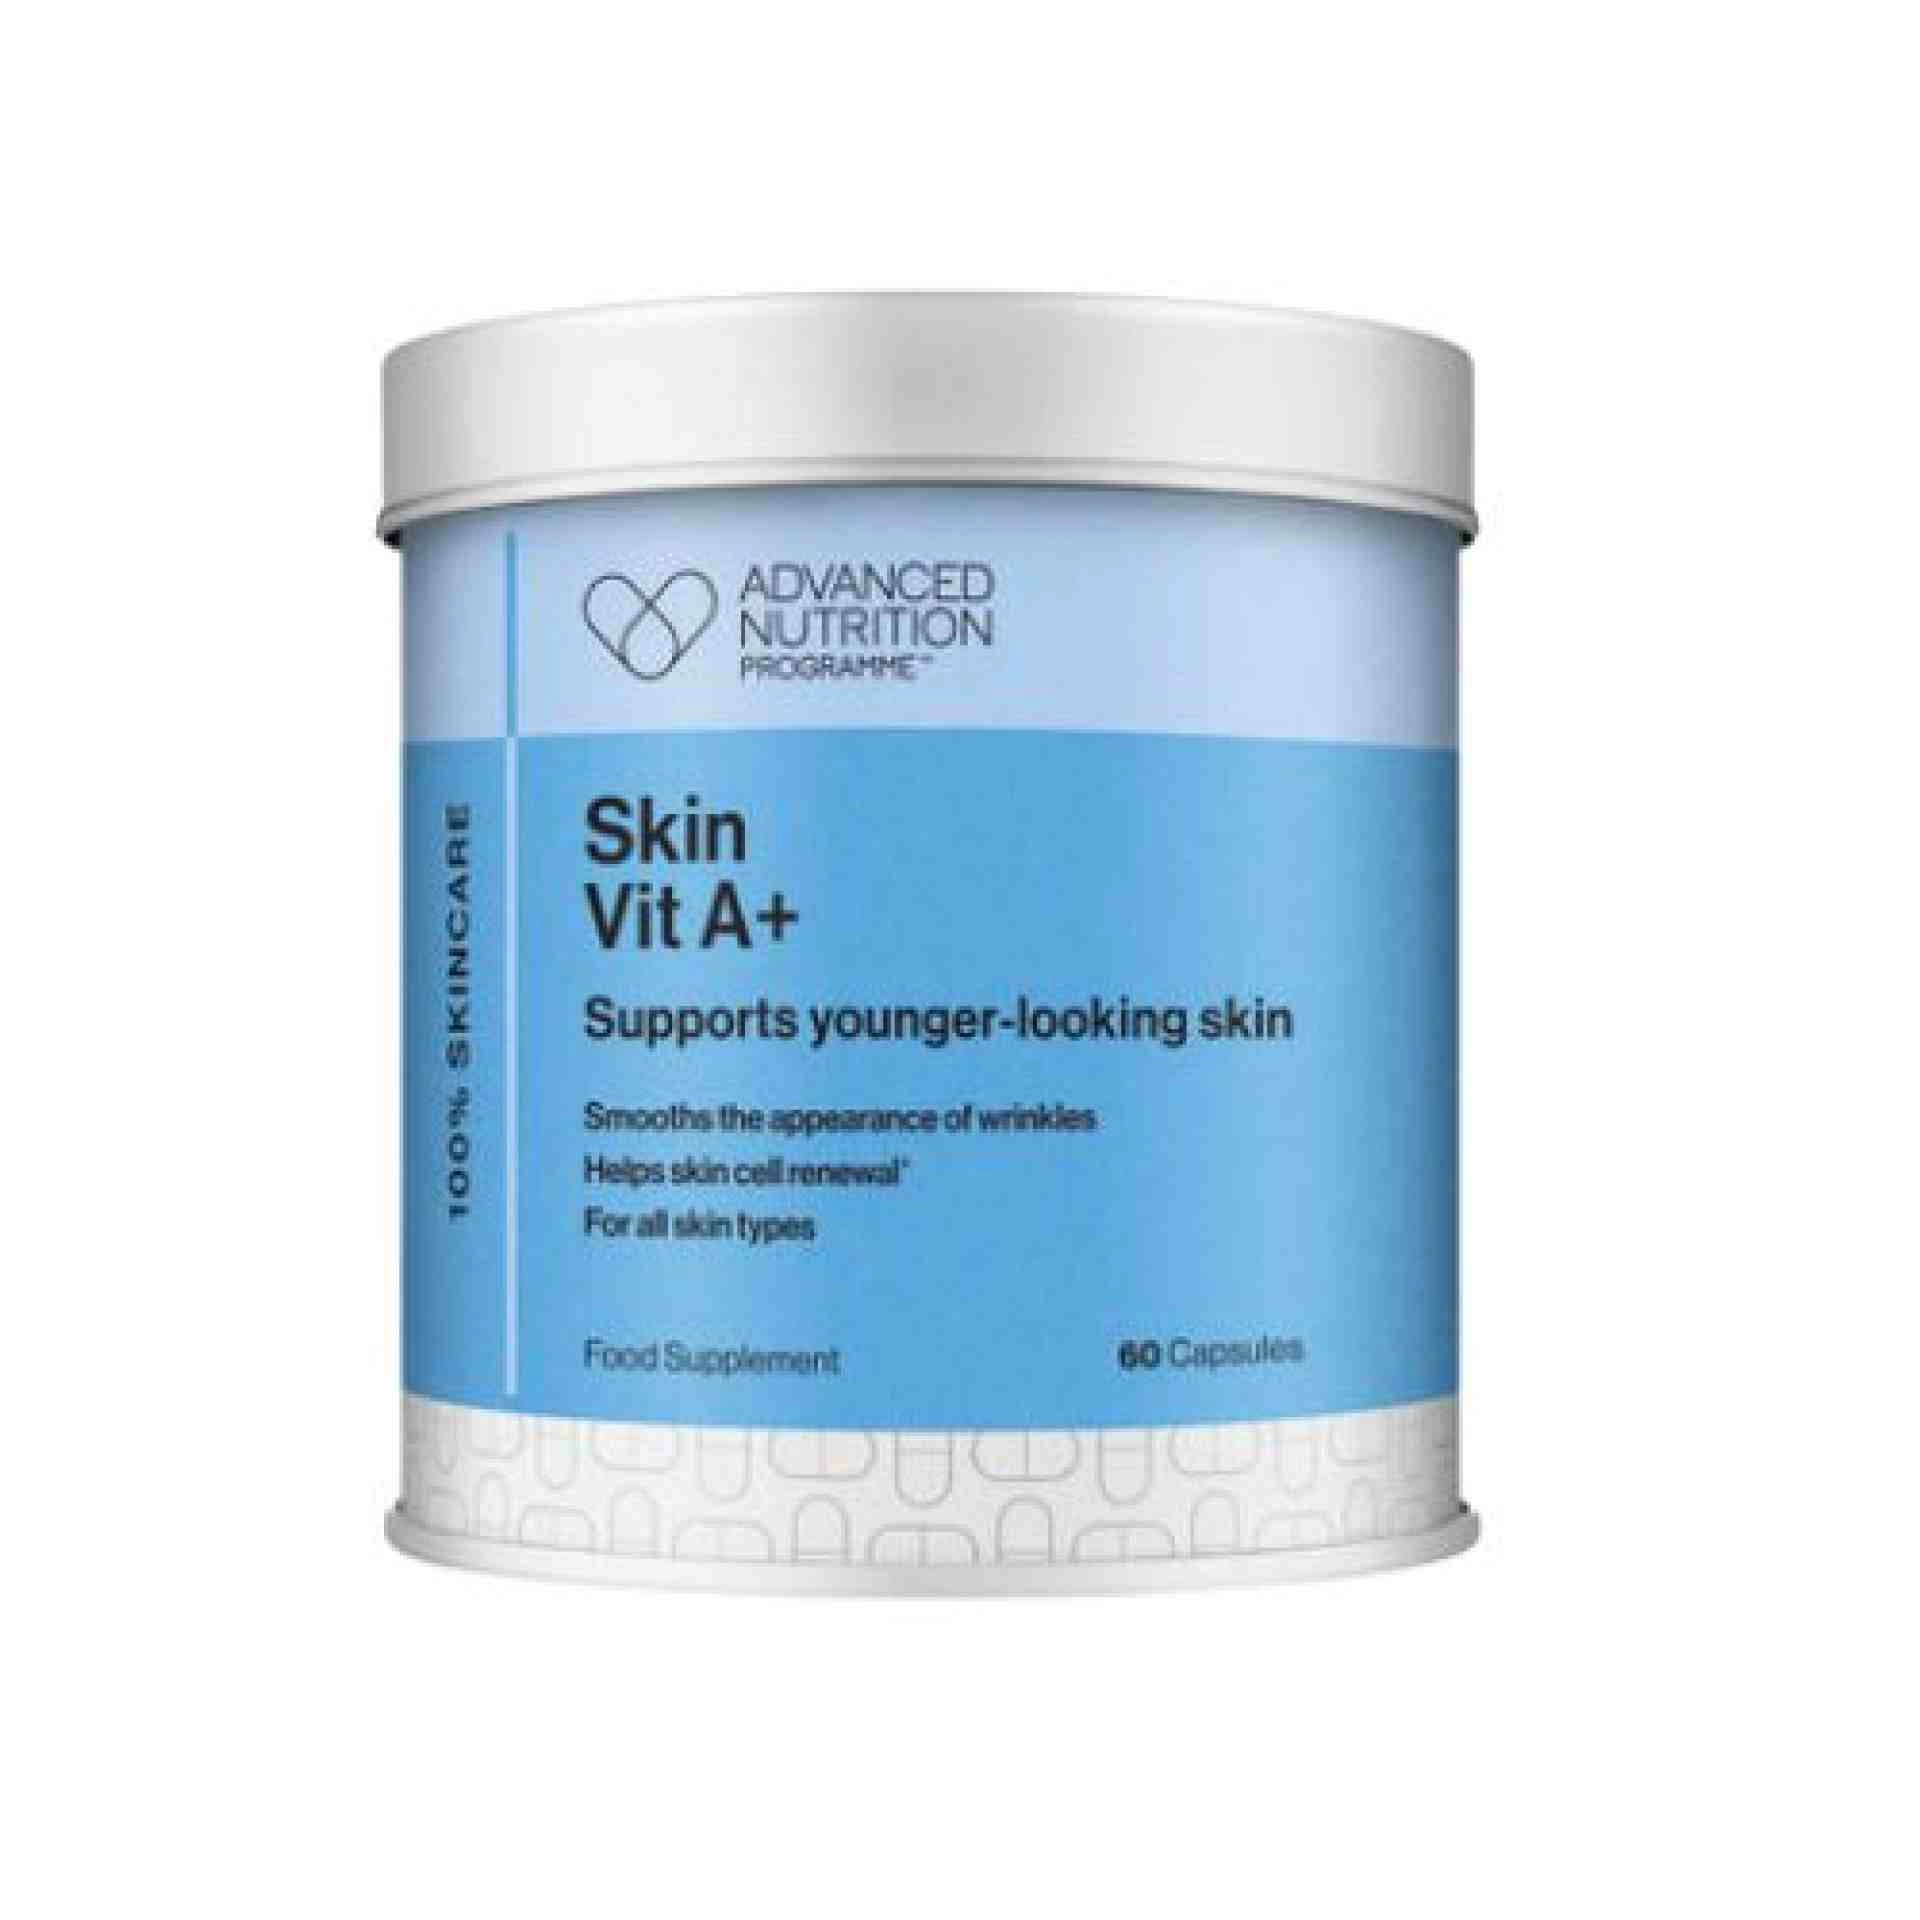 Skin Vit A - Nutricosmética 60 caps. - Soluciones específicas - Advanced Nutrition Programme ®